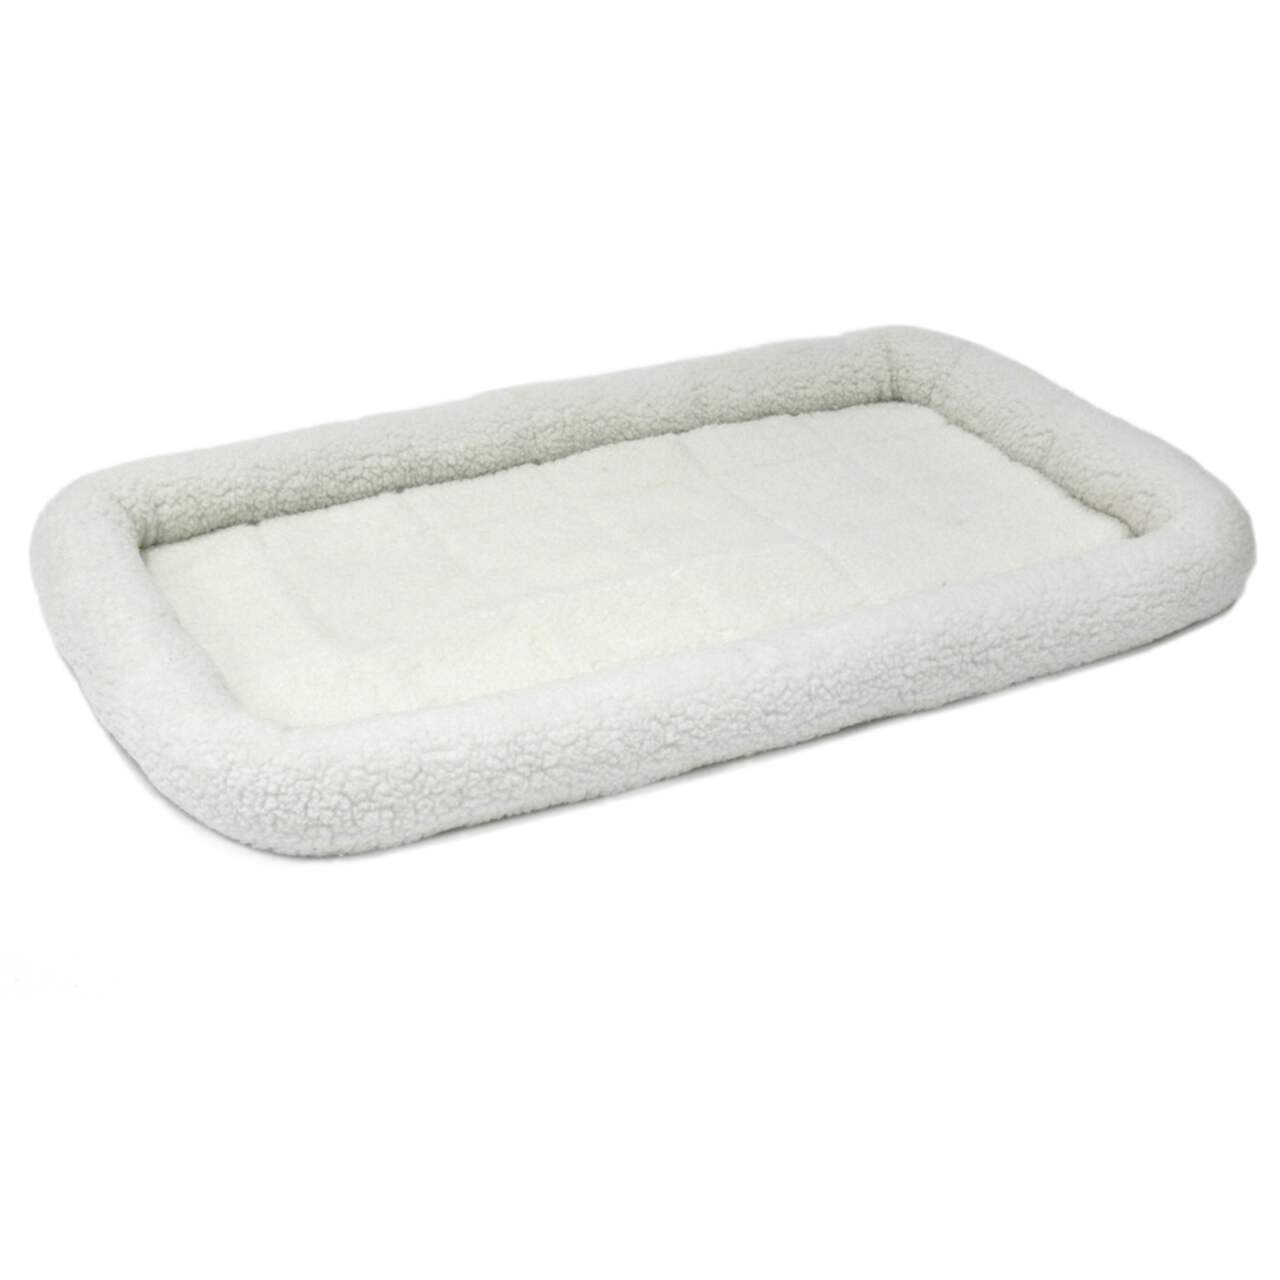 Comfyland Ultra-Soft Fleece Pet Bed, Washable, Assorted Sizes, Beige